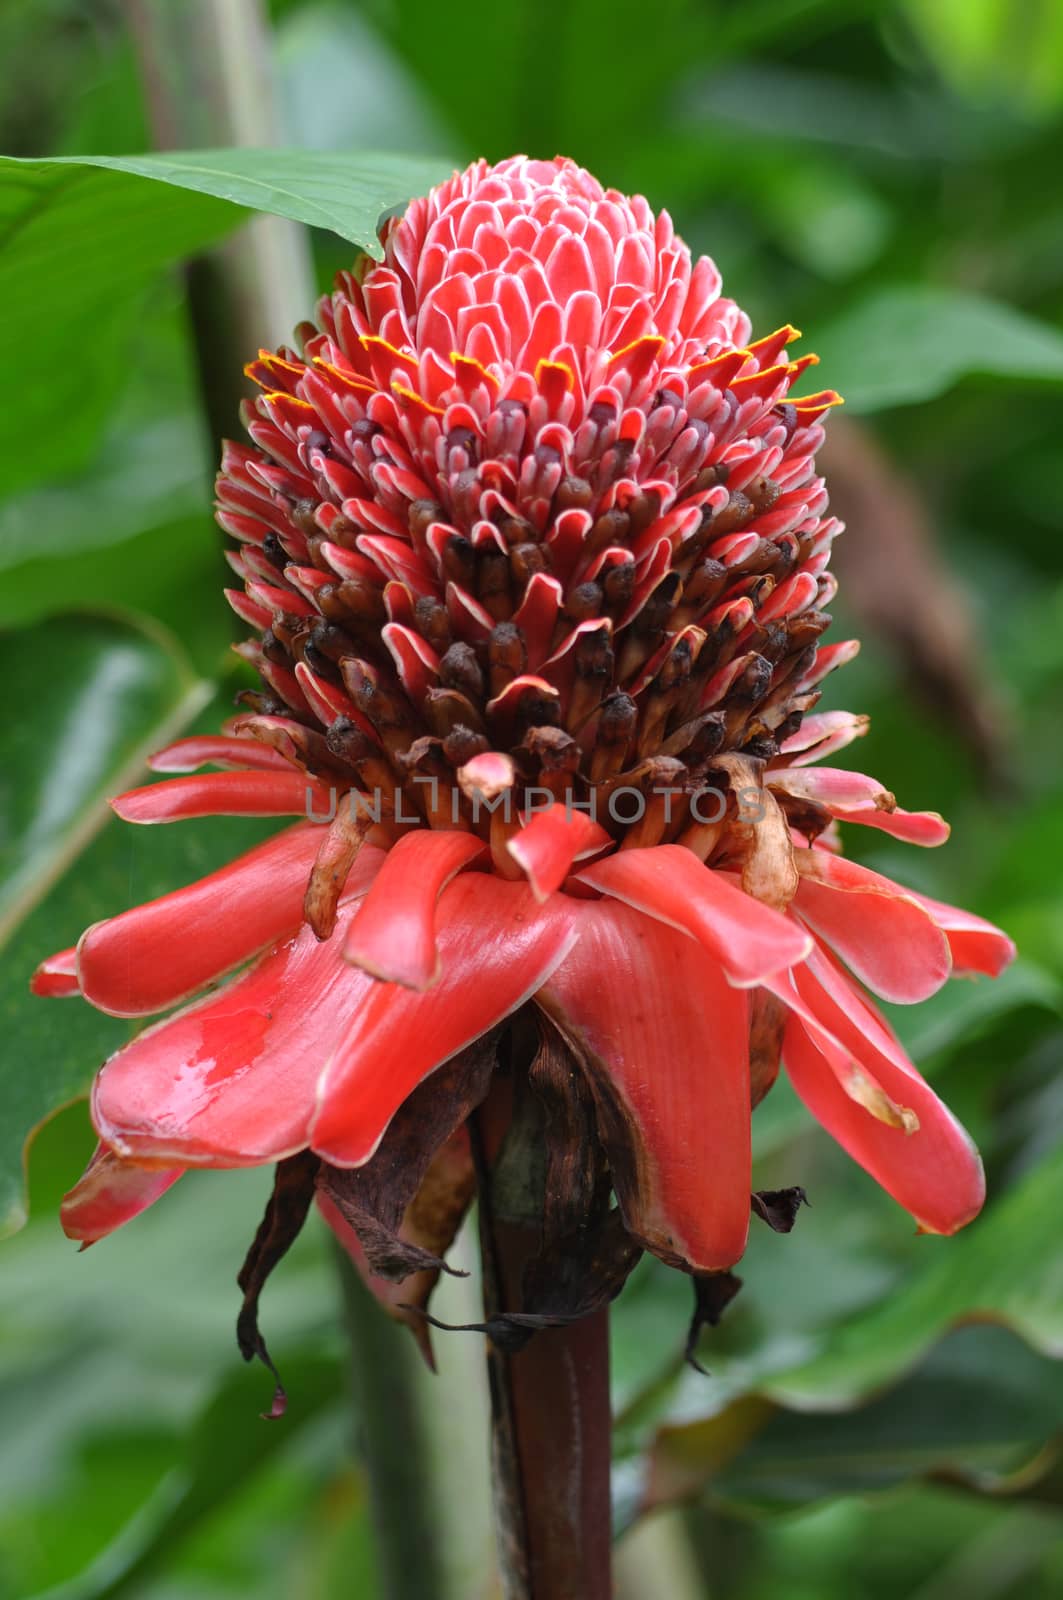 Closeup of Plant from jungle Torch Ginger, Phaeomeria Magnifica. Amazonia, Ecuador